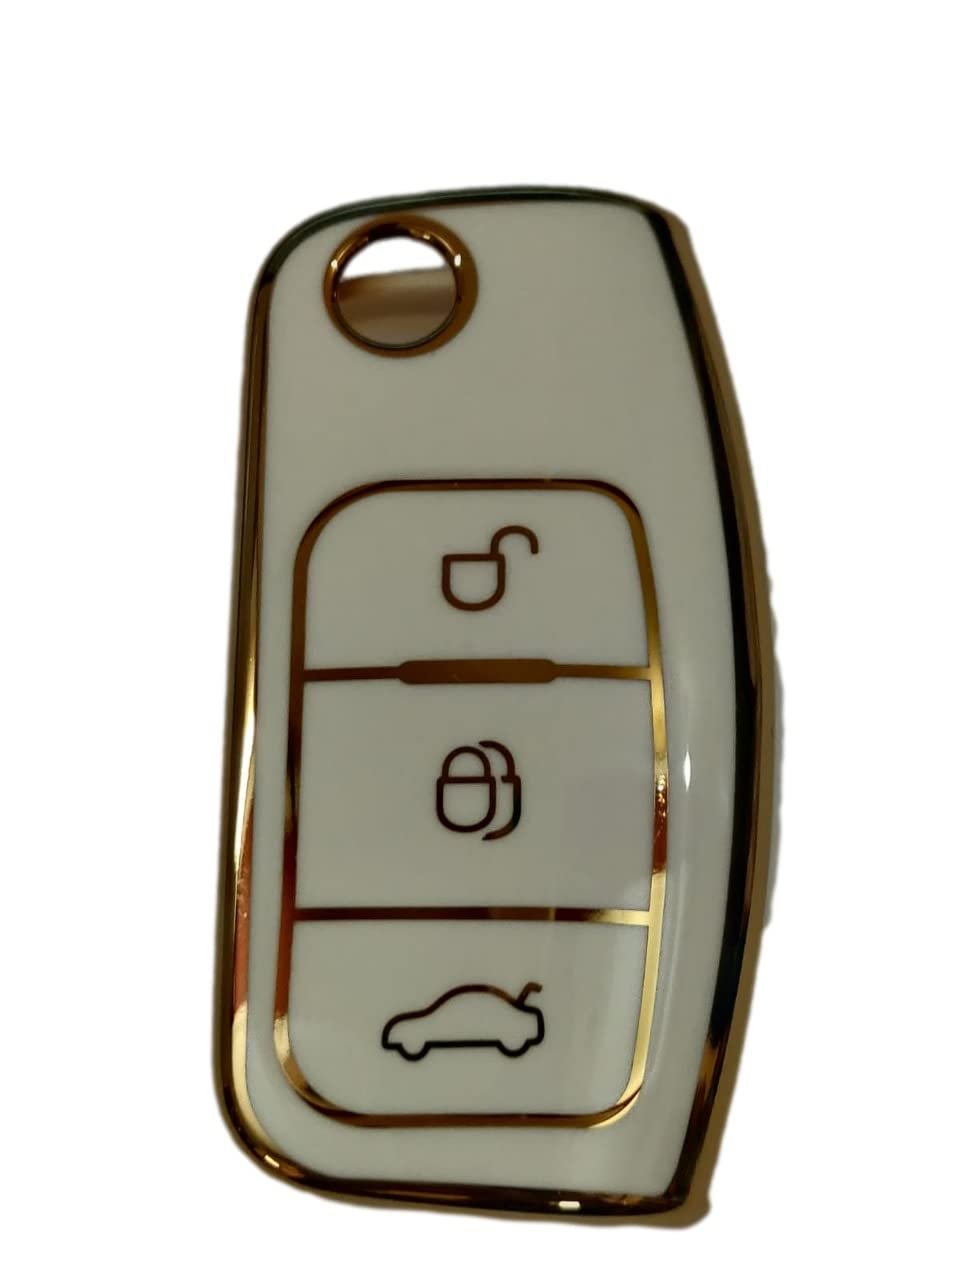 TPU Carbon Fiber Style Car Key Cover Compatible with Fiesta, Figo, Old Ecosport Flip Key (White) Image 